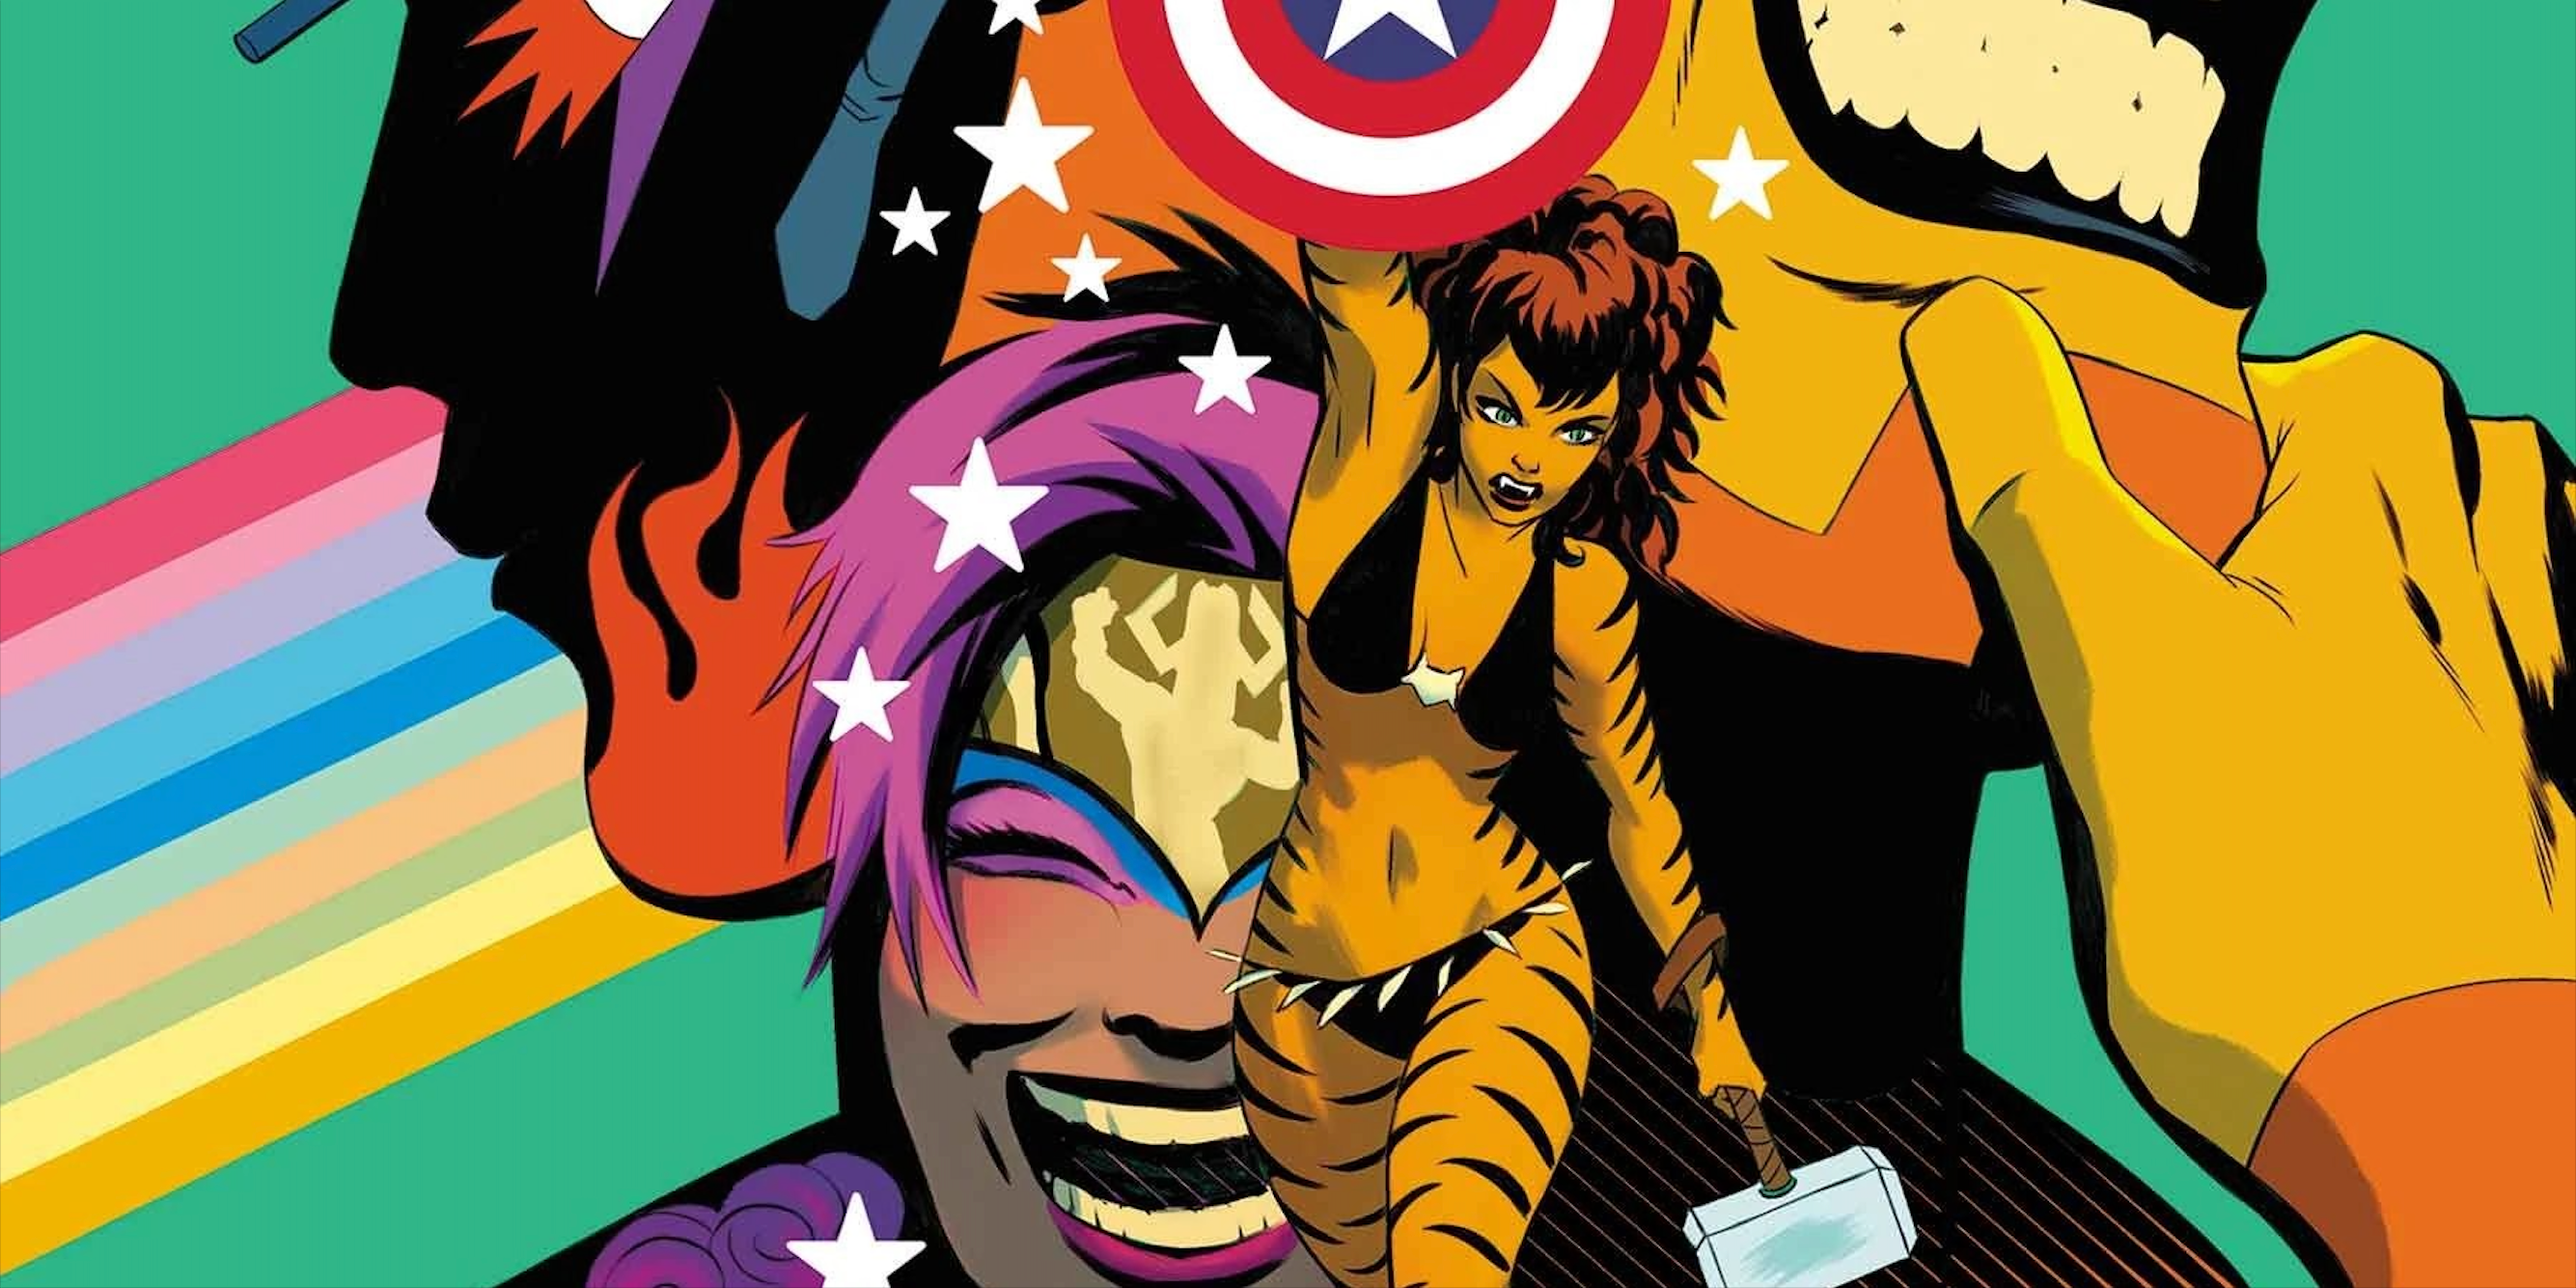 Tigra with Captain America's shield and Mjolnir